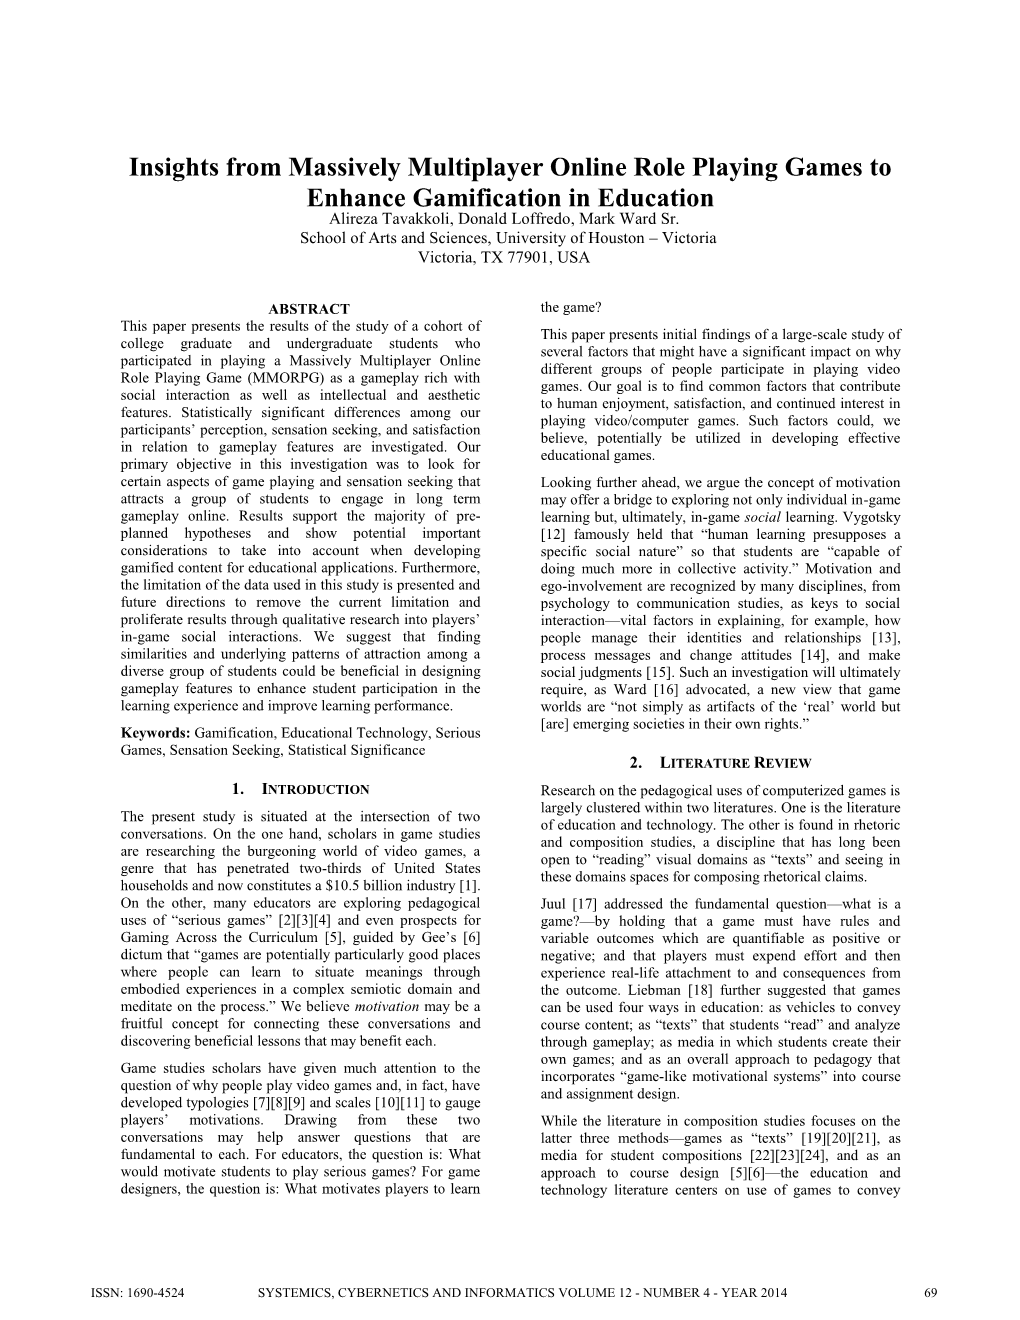 Insights from Massively Multiplayer Online Role Playing Games to Enhance Gamification in Education Alireza Tavakkoli, Donald Loffredo, Mark Ward Sr